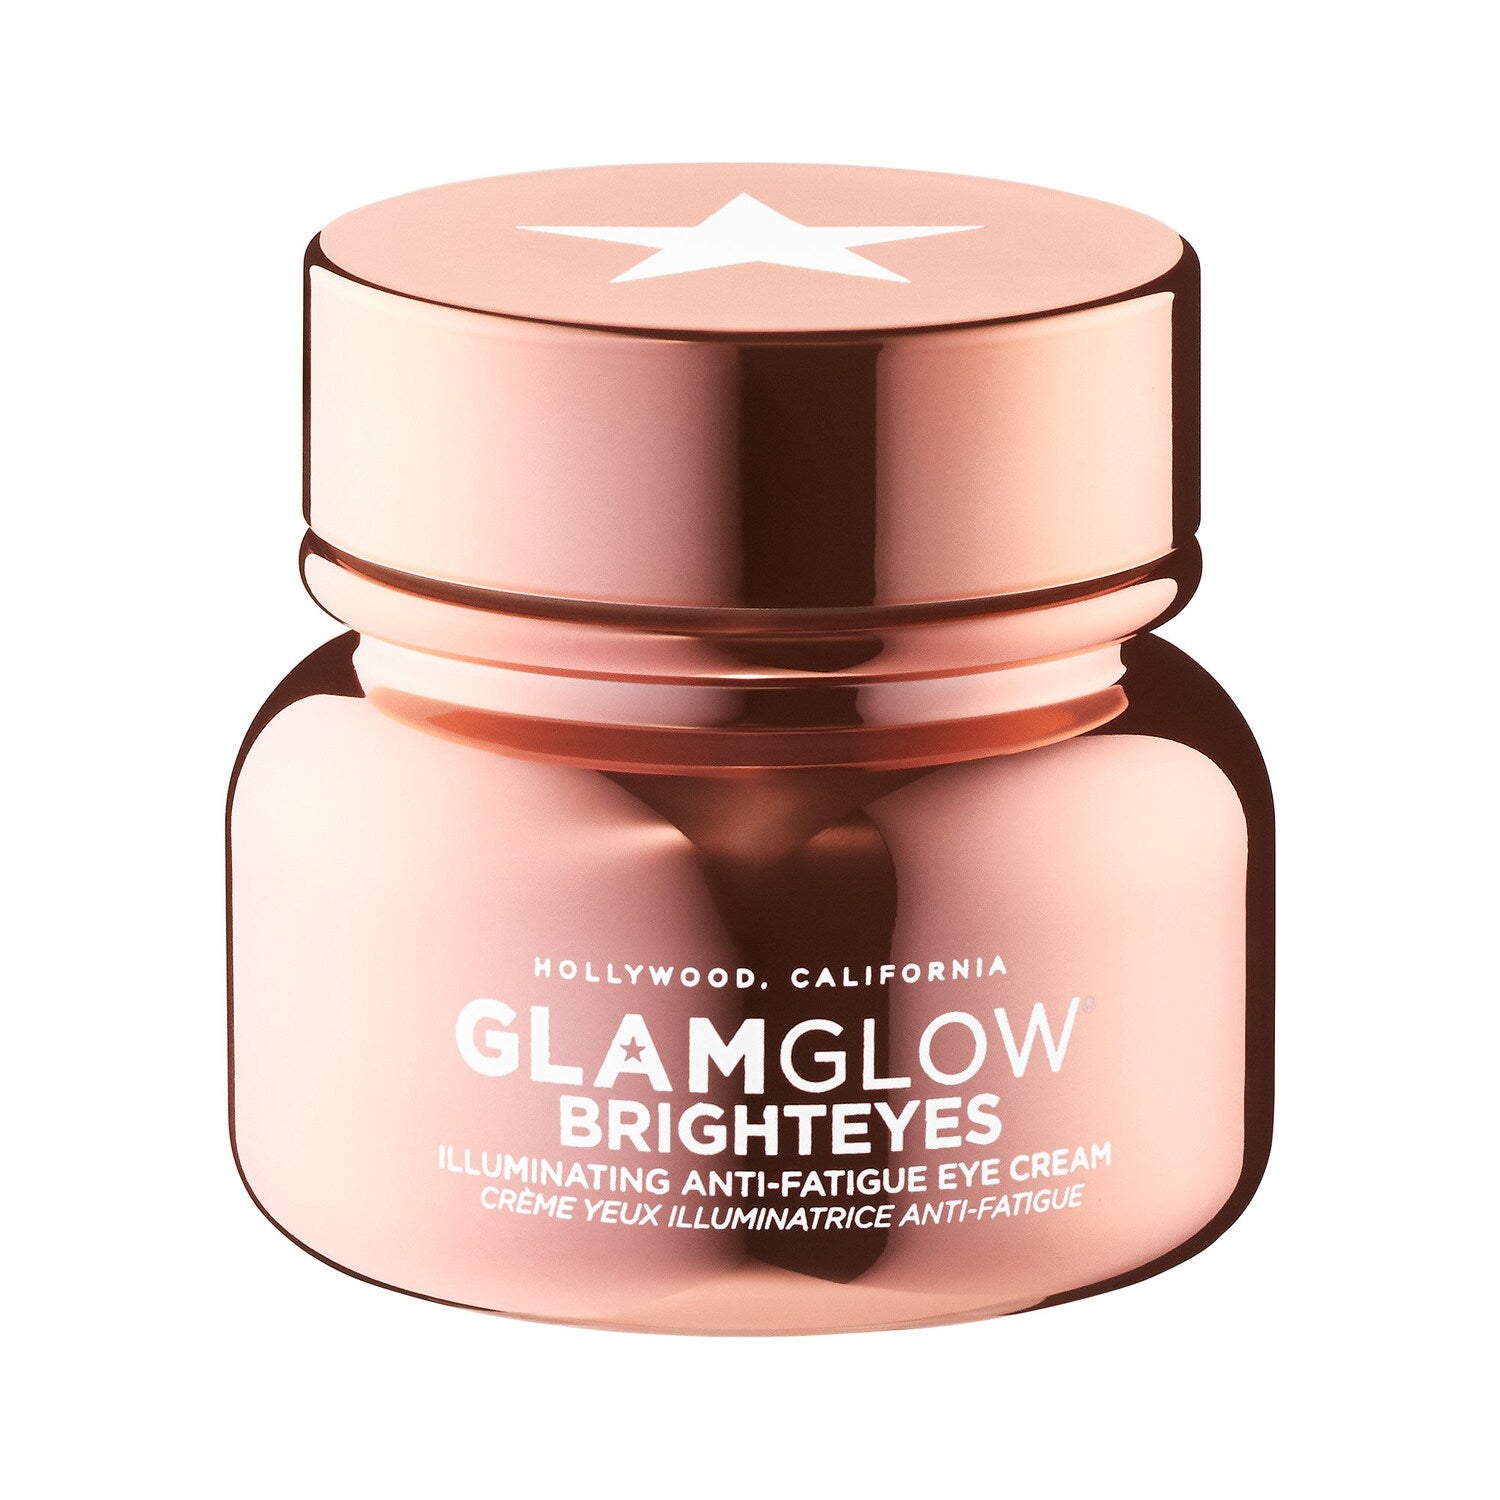 BRIGHTEYES™ Illuminating Anti-Fatigue Eye Cream